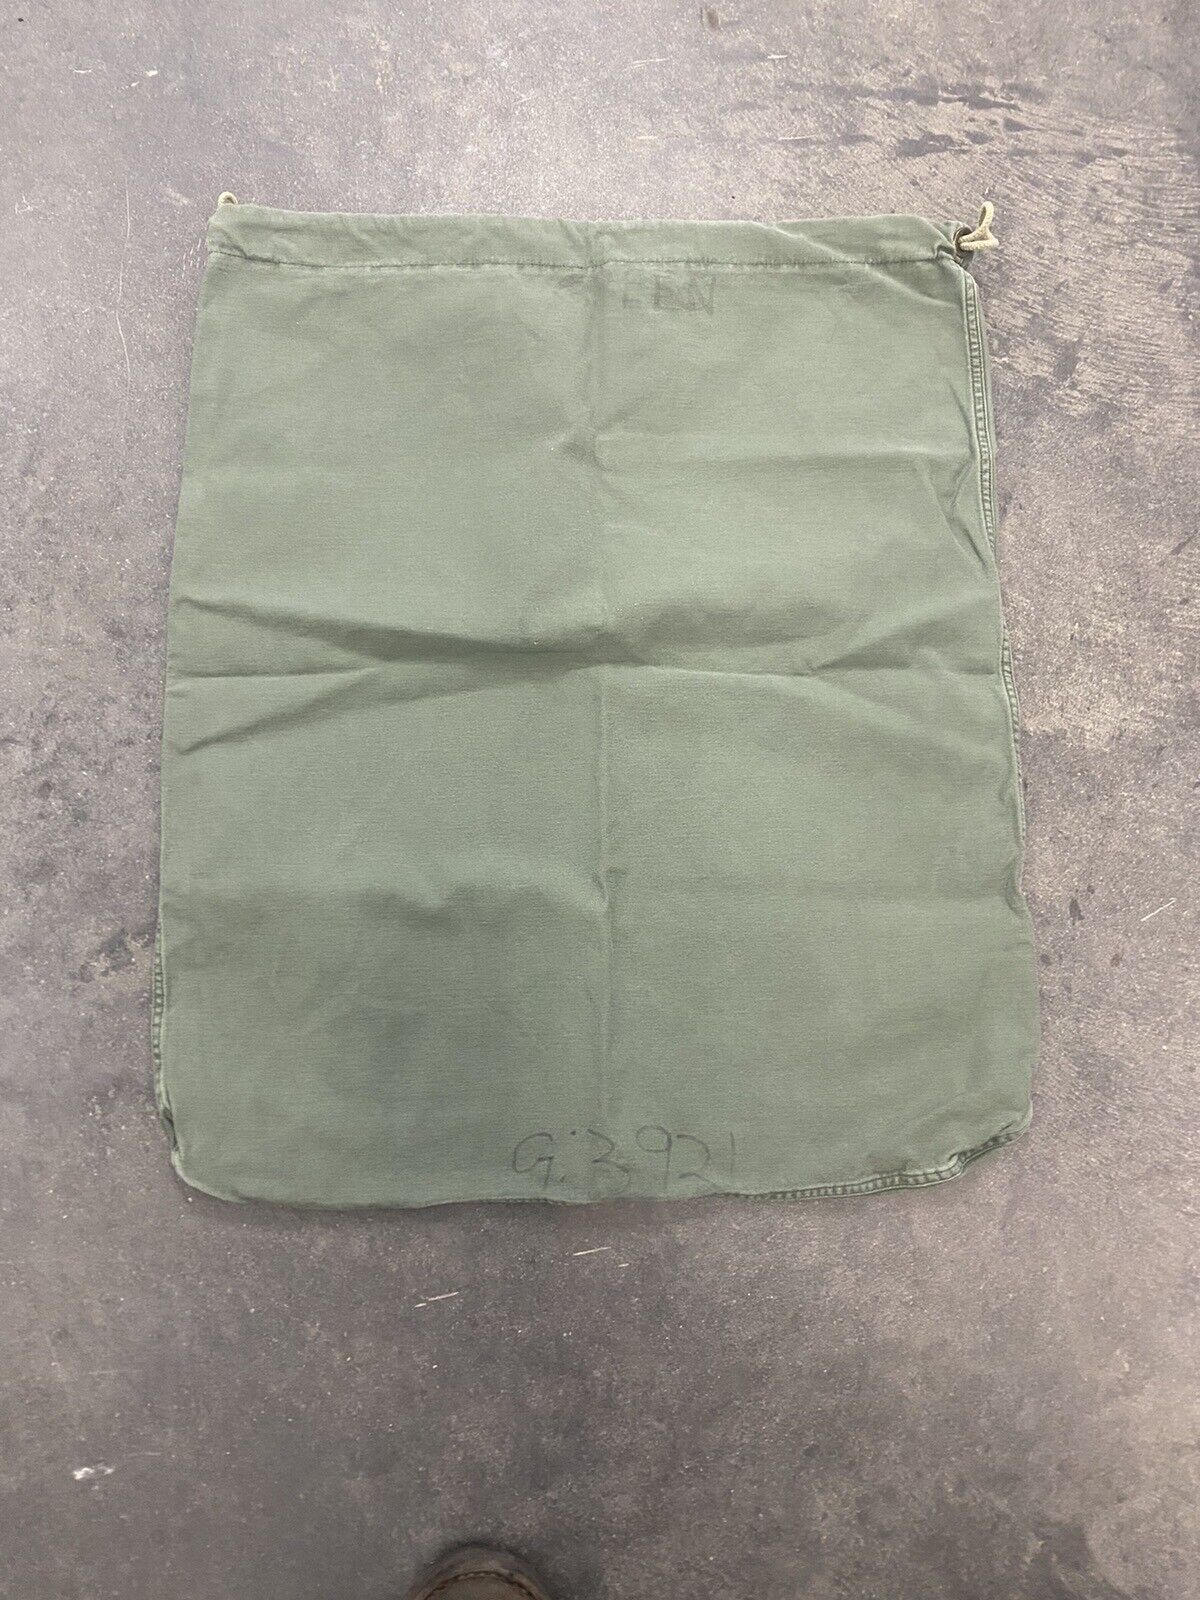 US Army BARRACKS BAG OD Green 100% Cotton Large Laundry Bag